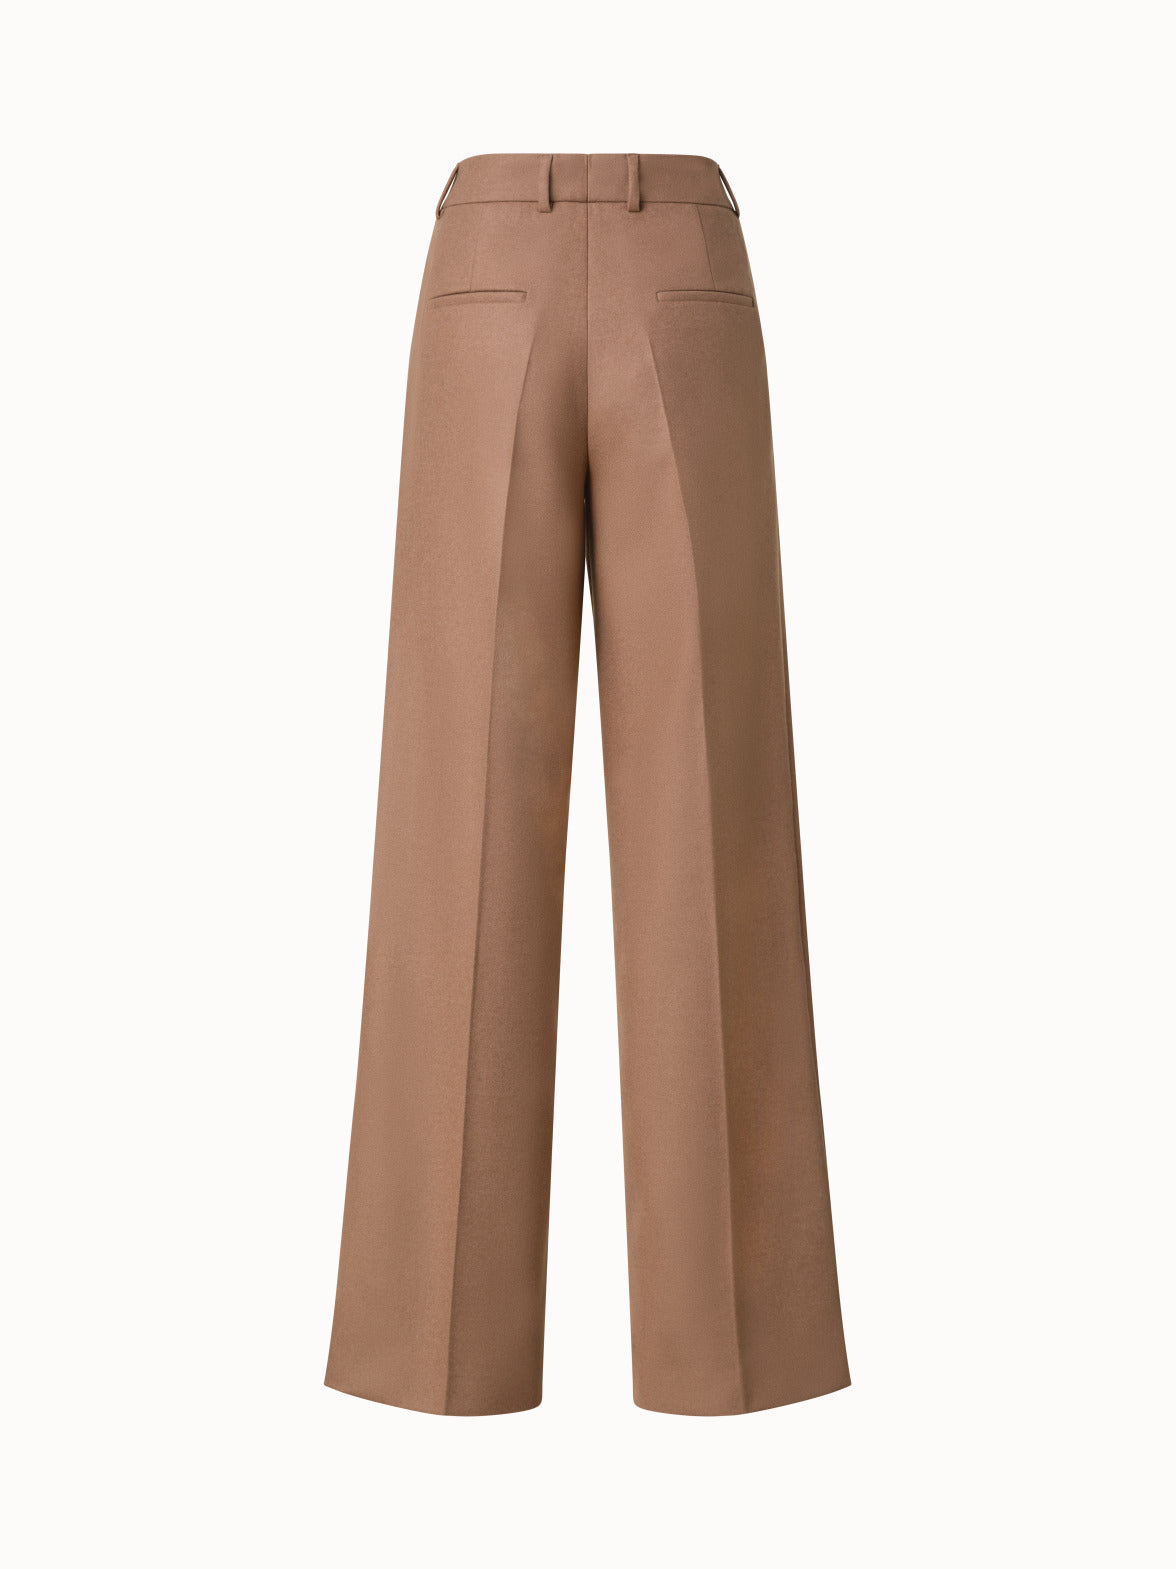 Gunex Womens Size US 10 Tan Wool Blend Pants in Excellent